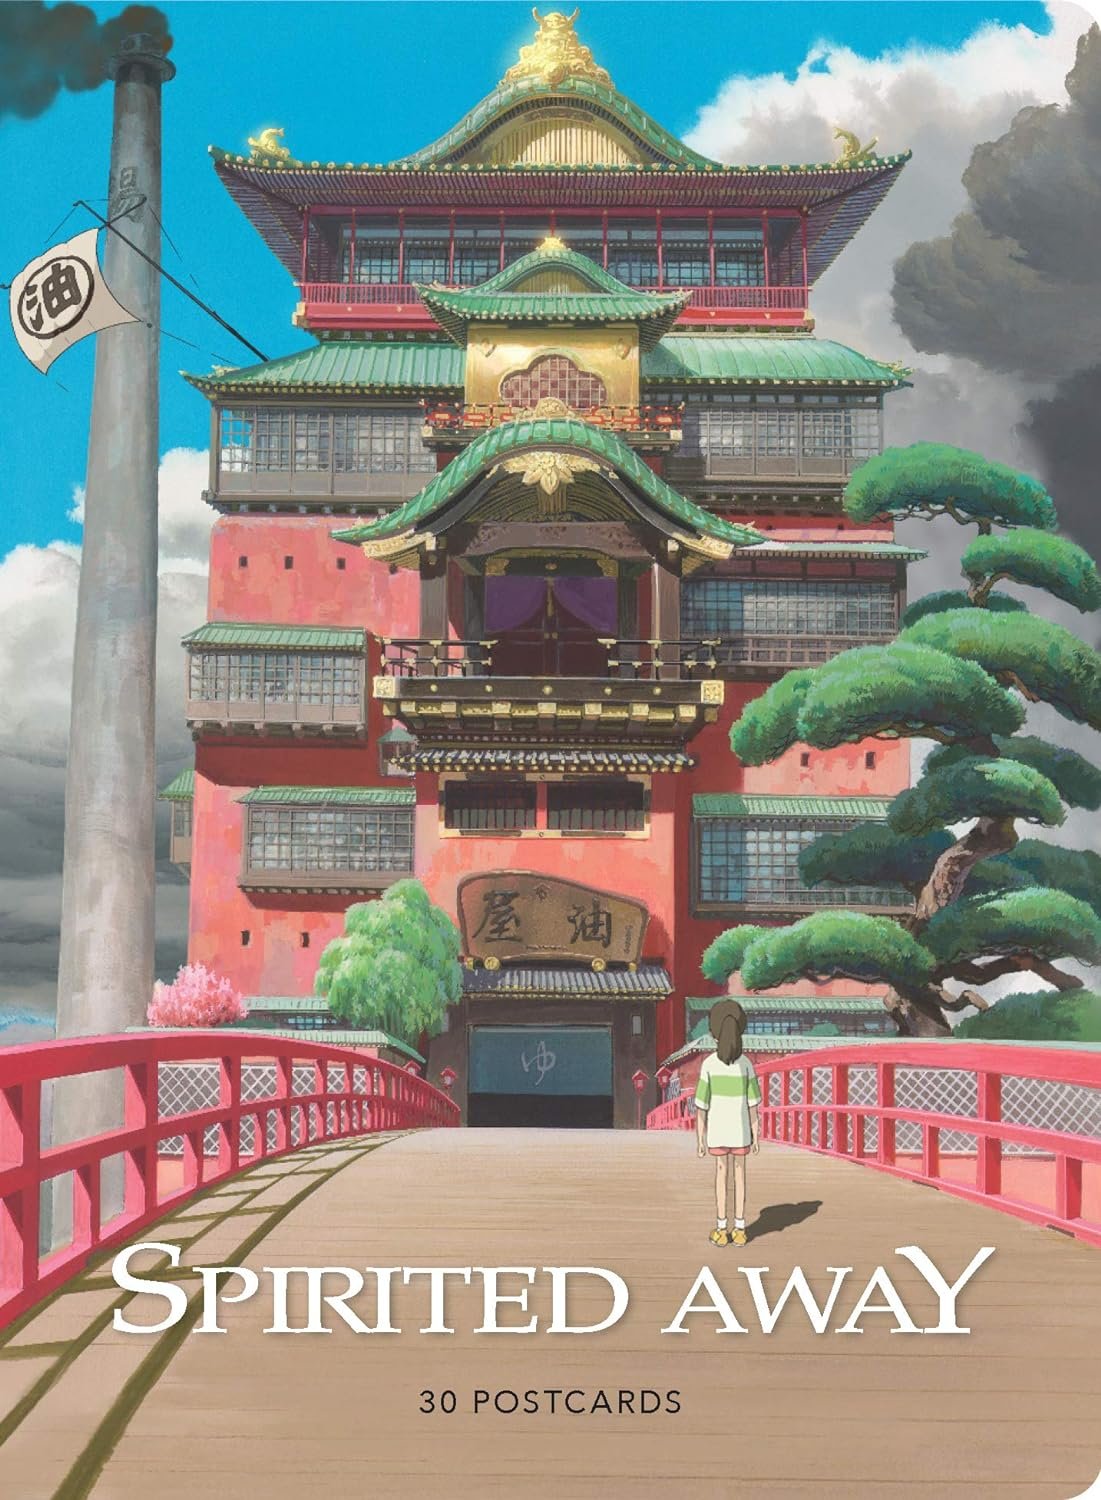 Spirited Away: 30 Postcards (Studio Ghibli x Chronicle Books)